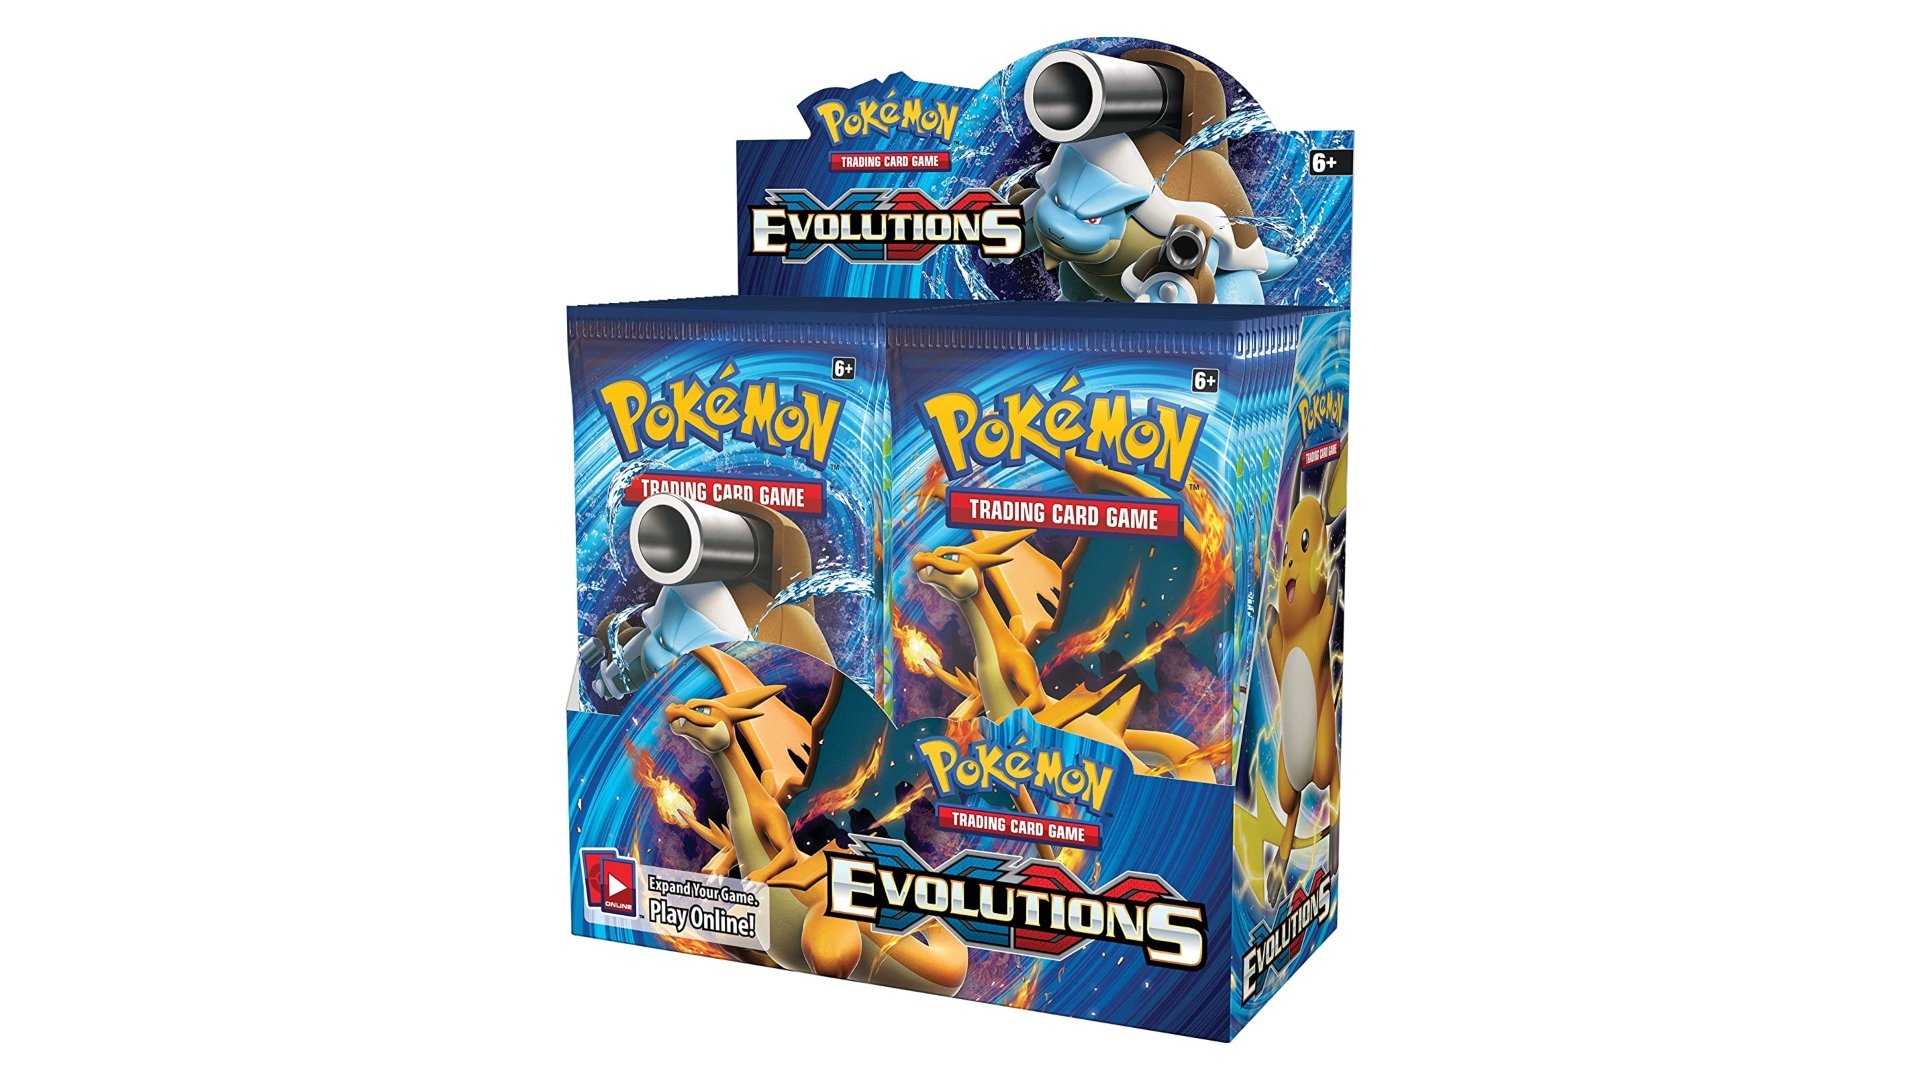 The best Pokémon booster boxes - a box of XY Evolutions Pokémon cards